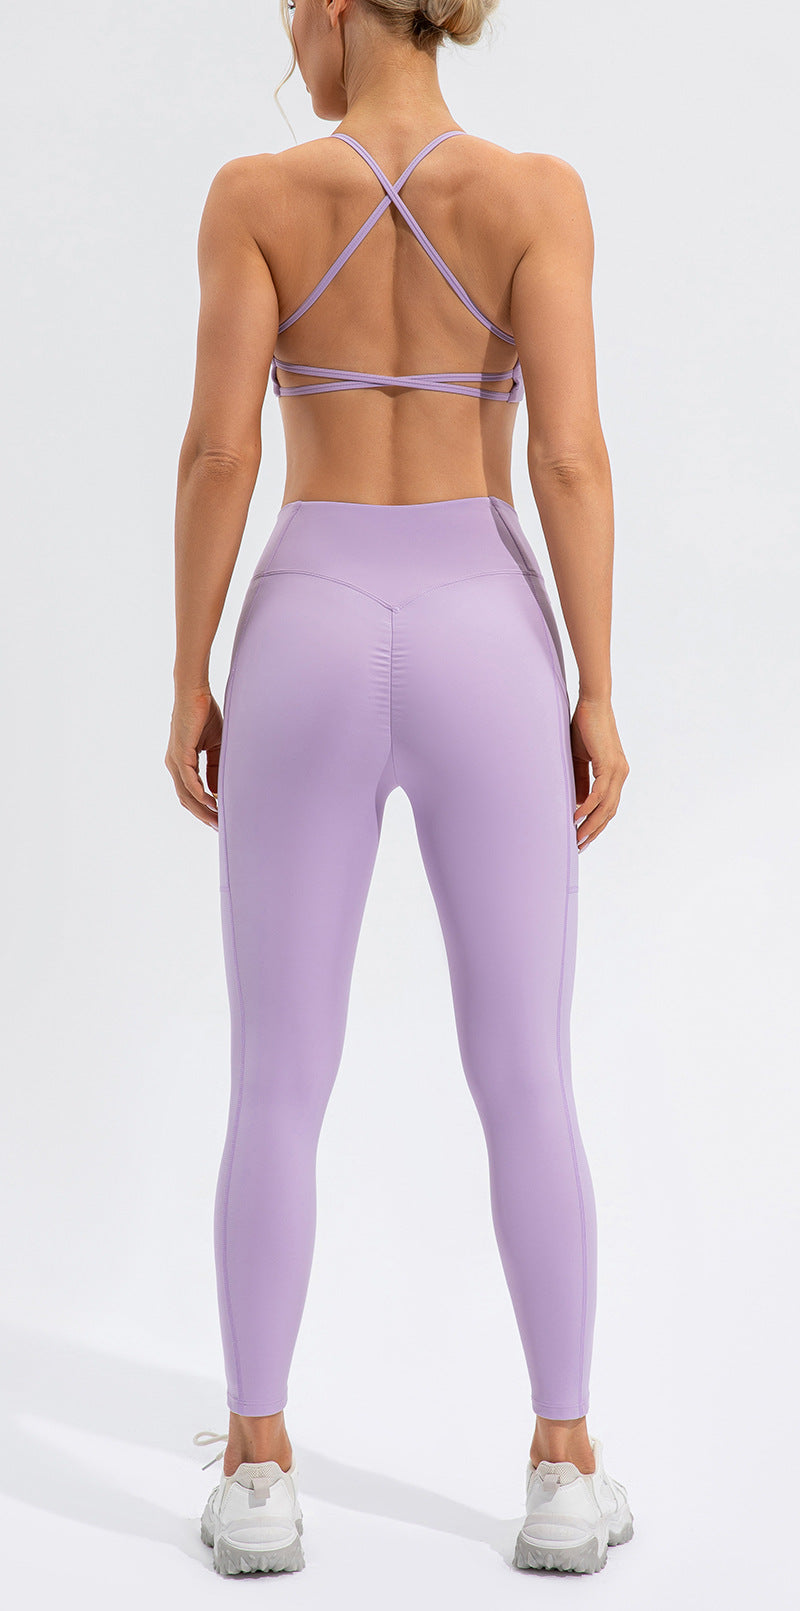 Yoga Clothes Set Fitness Bra + Pants 5 colors